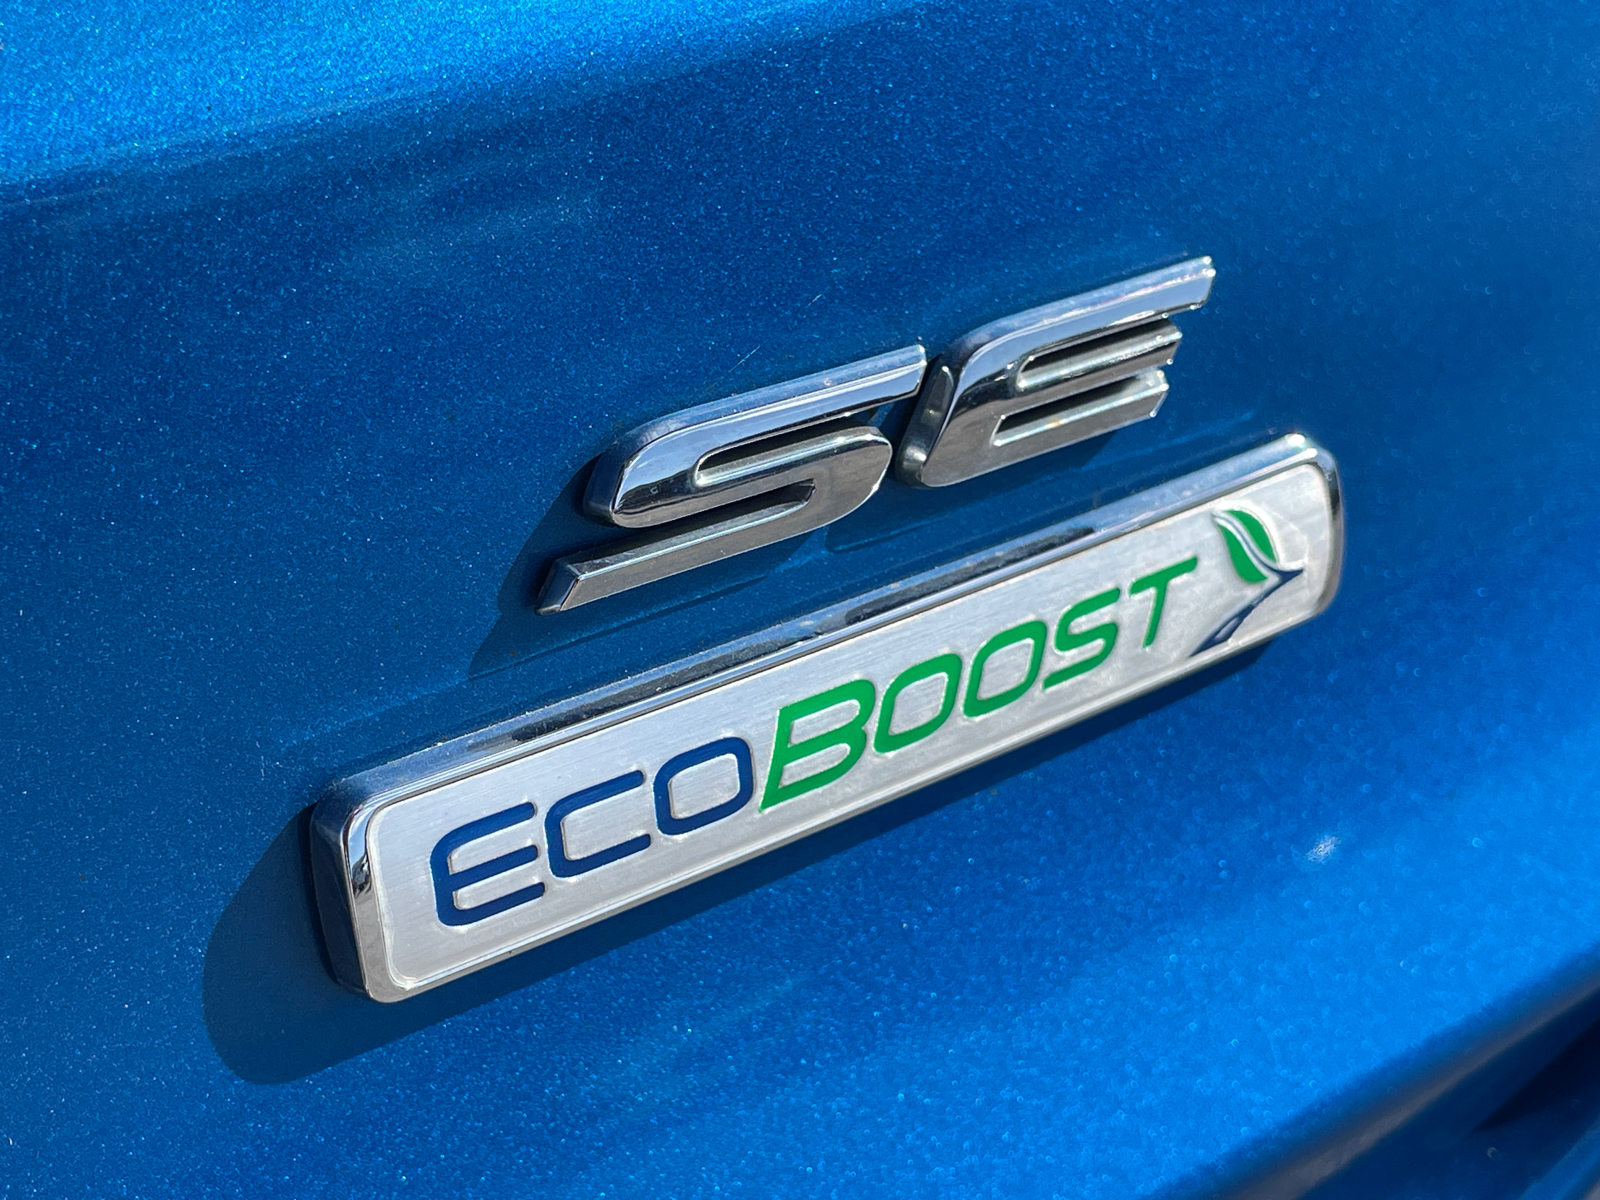 2020 Ford Fusion SE 14